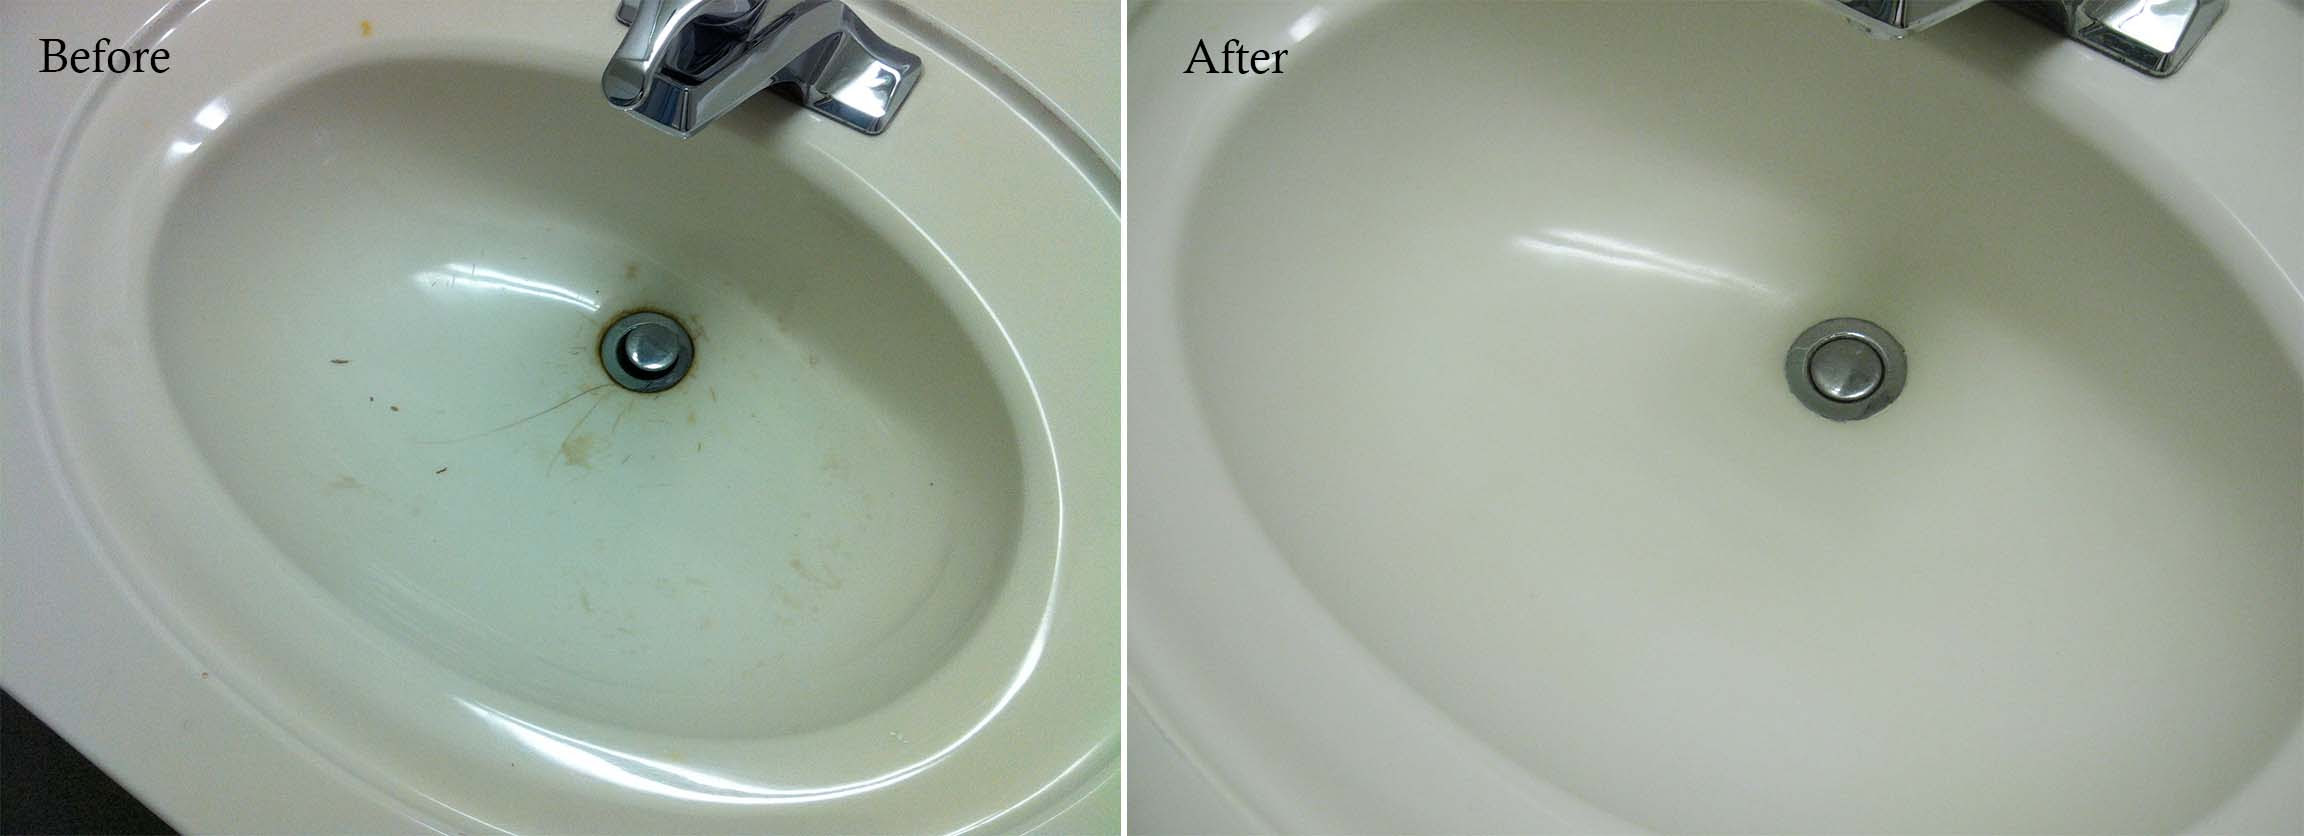 Enamel Repair Kit Bath Sink Shower Tray Chip White Ceramic Acrylic Not Painta Ebay